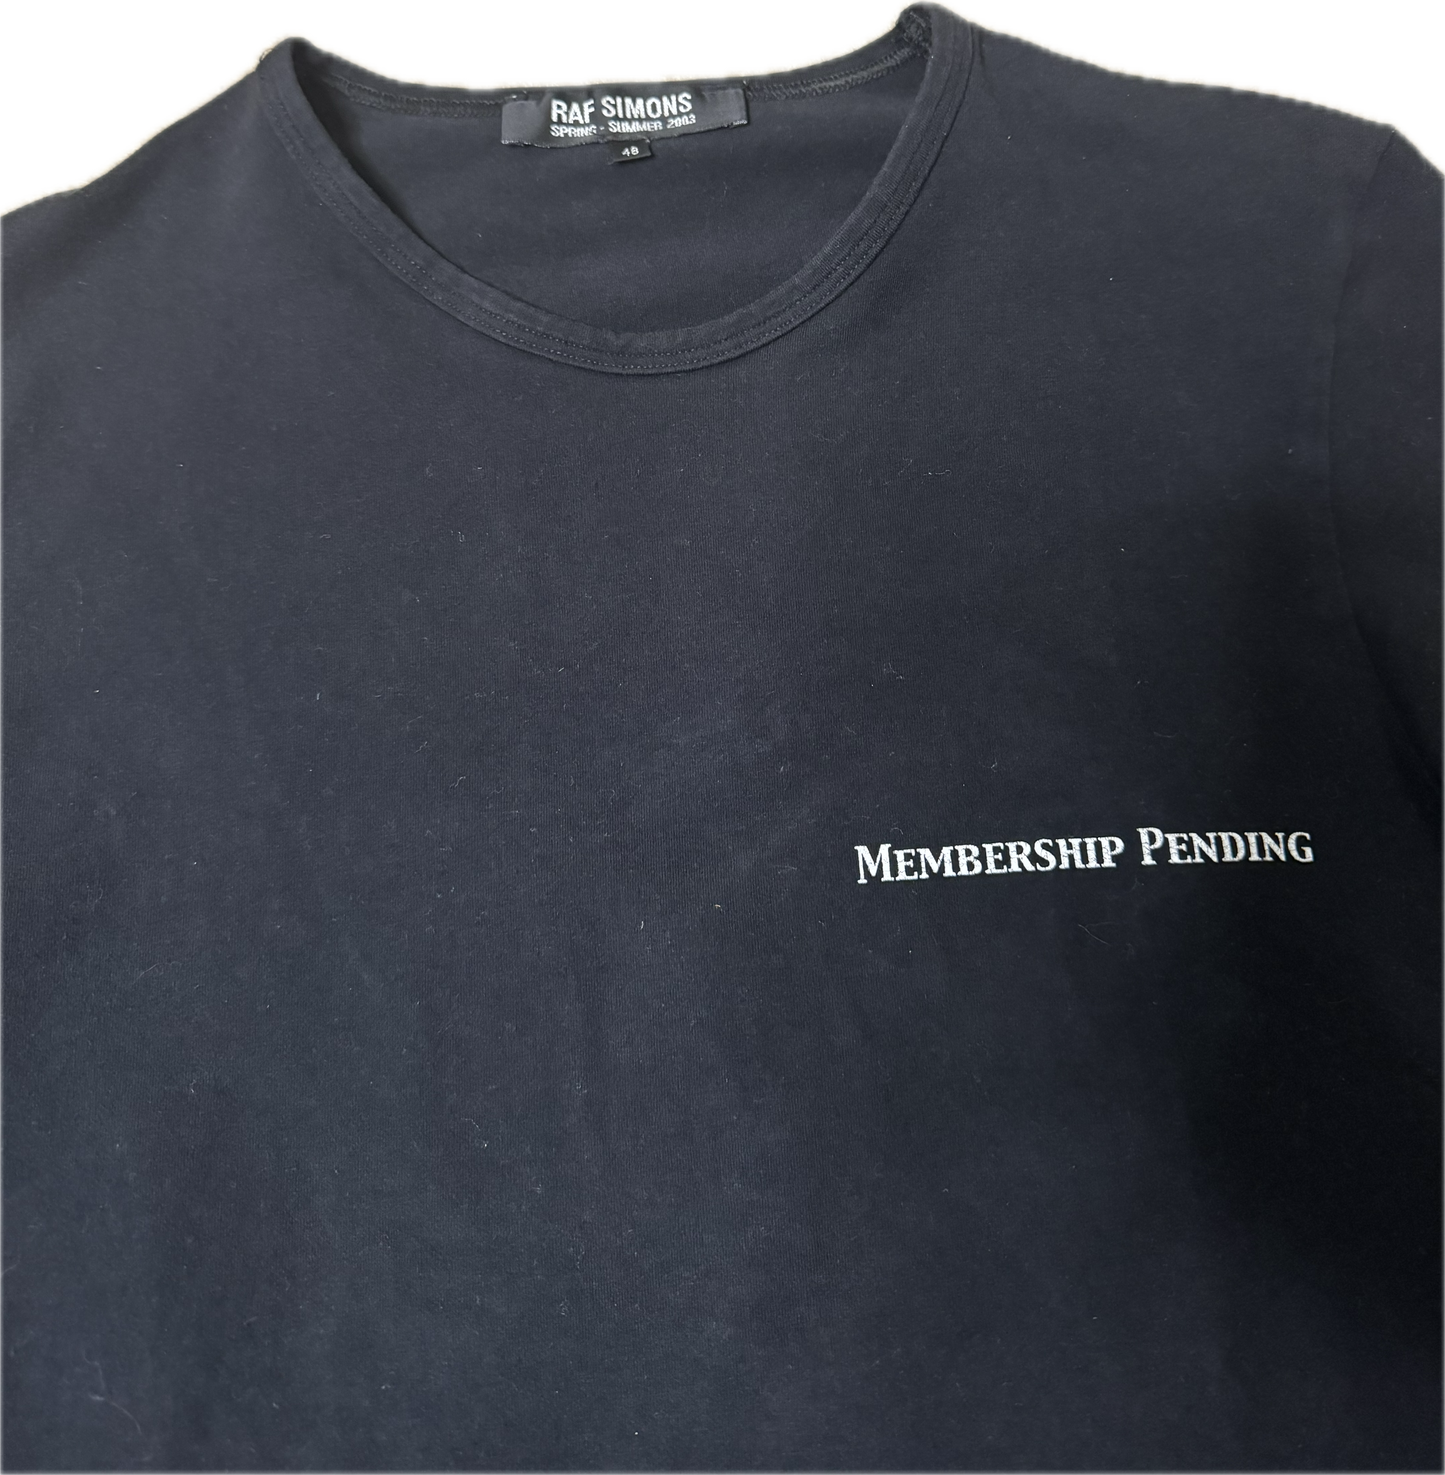 Raf Simons SS 2003 Membership Pending Long Sleeve T Shirt